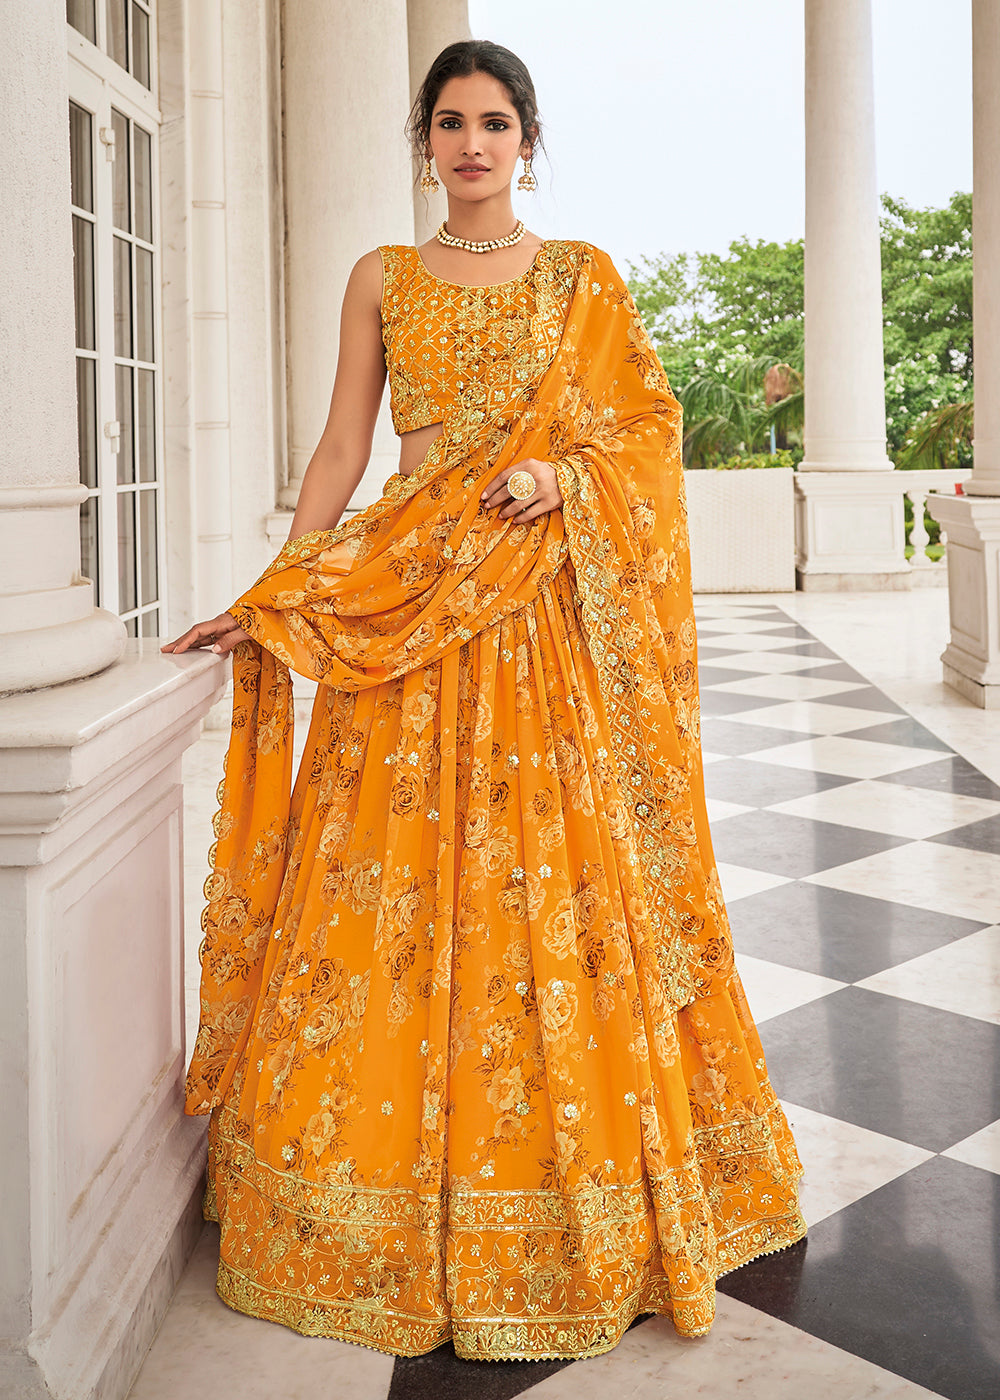 Buy Now Digital Printed Yellow Designer Trendy Lehenga Choli Online in USA, UK, Canada & Worldwide at Empress Clothing.